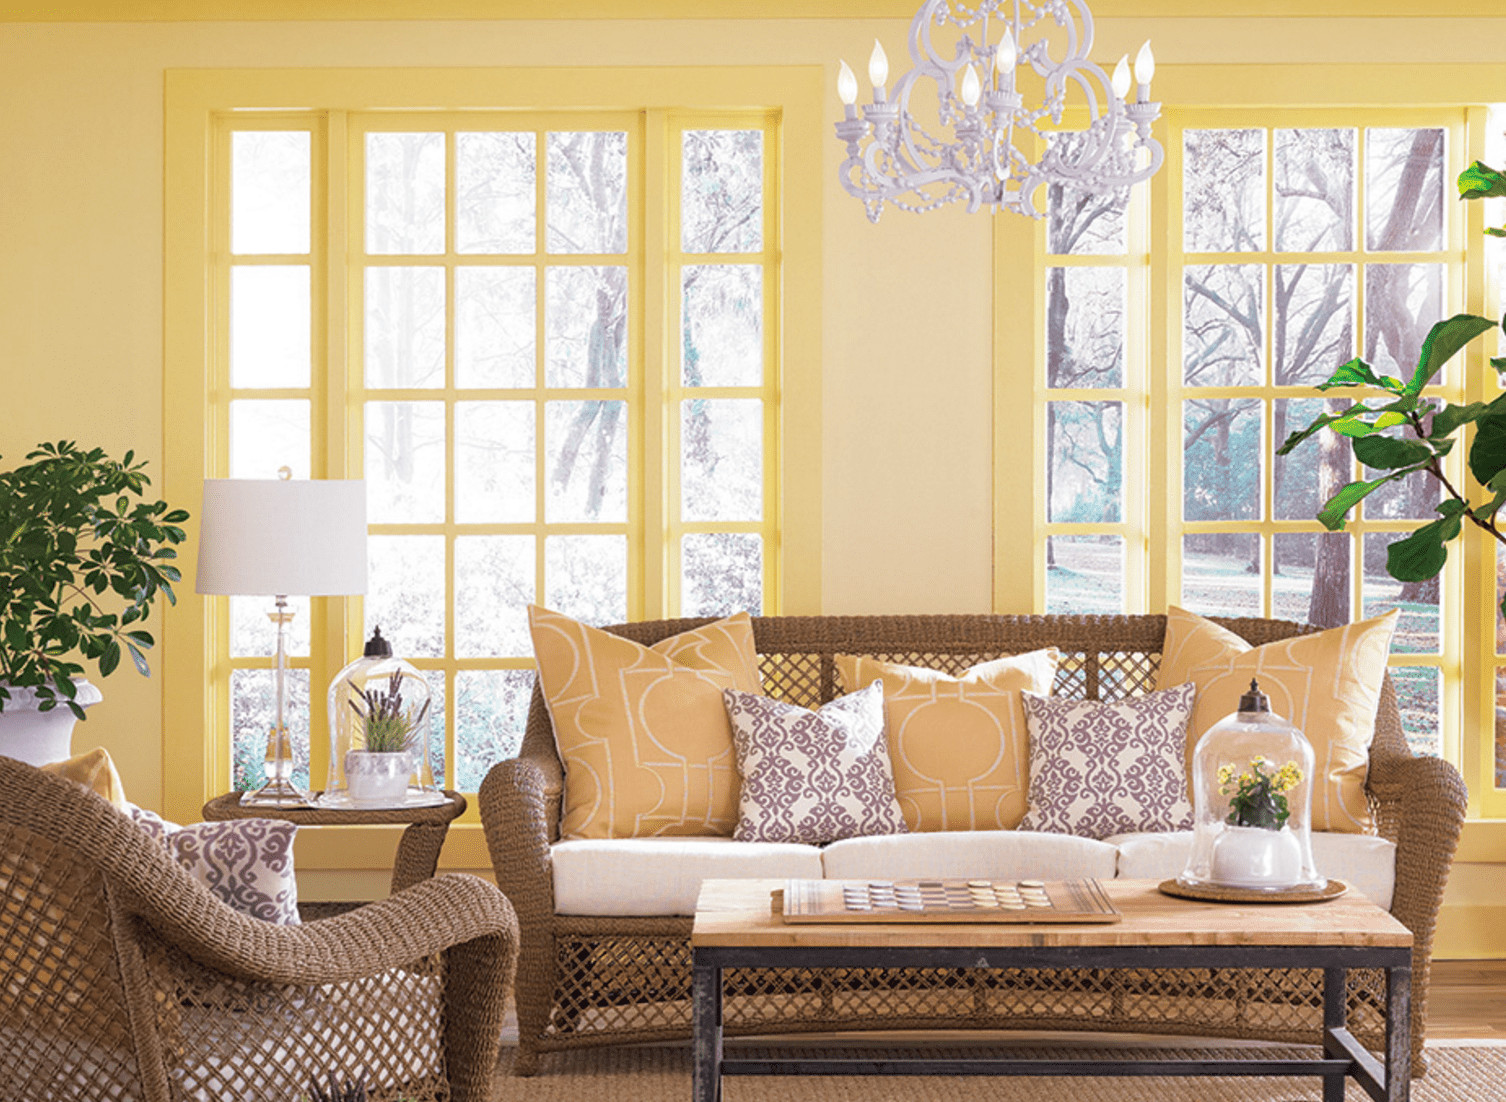 Best Living Room Paint Colors
 11 Best Neutral Paint Colors for Your Home